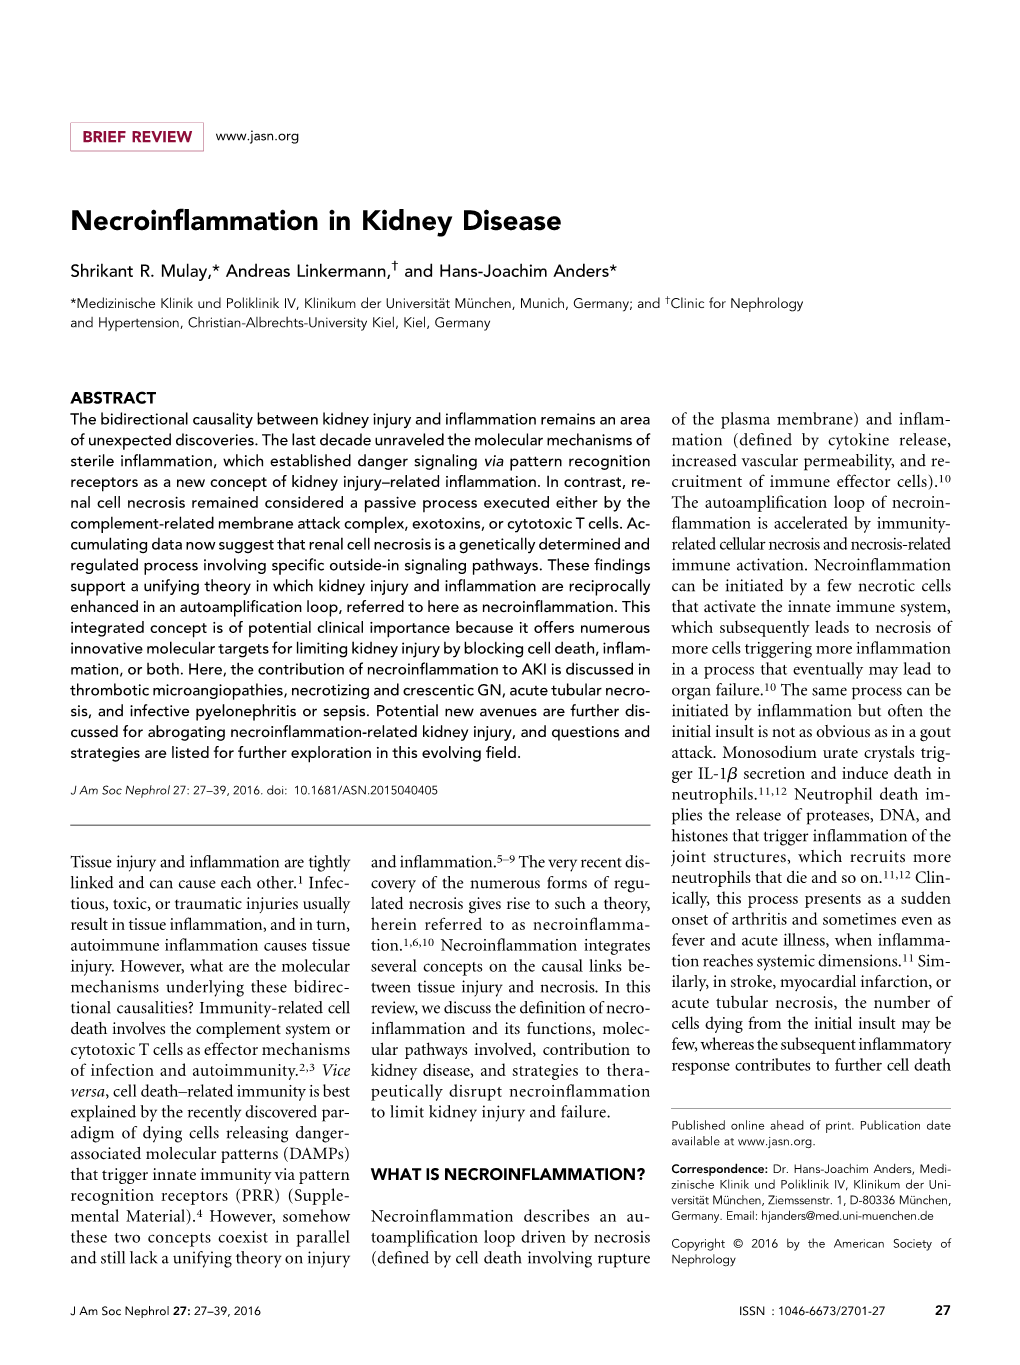 Necroinflammation in Kidney Disease